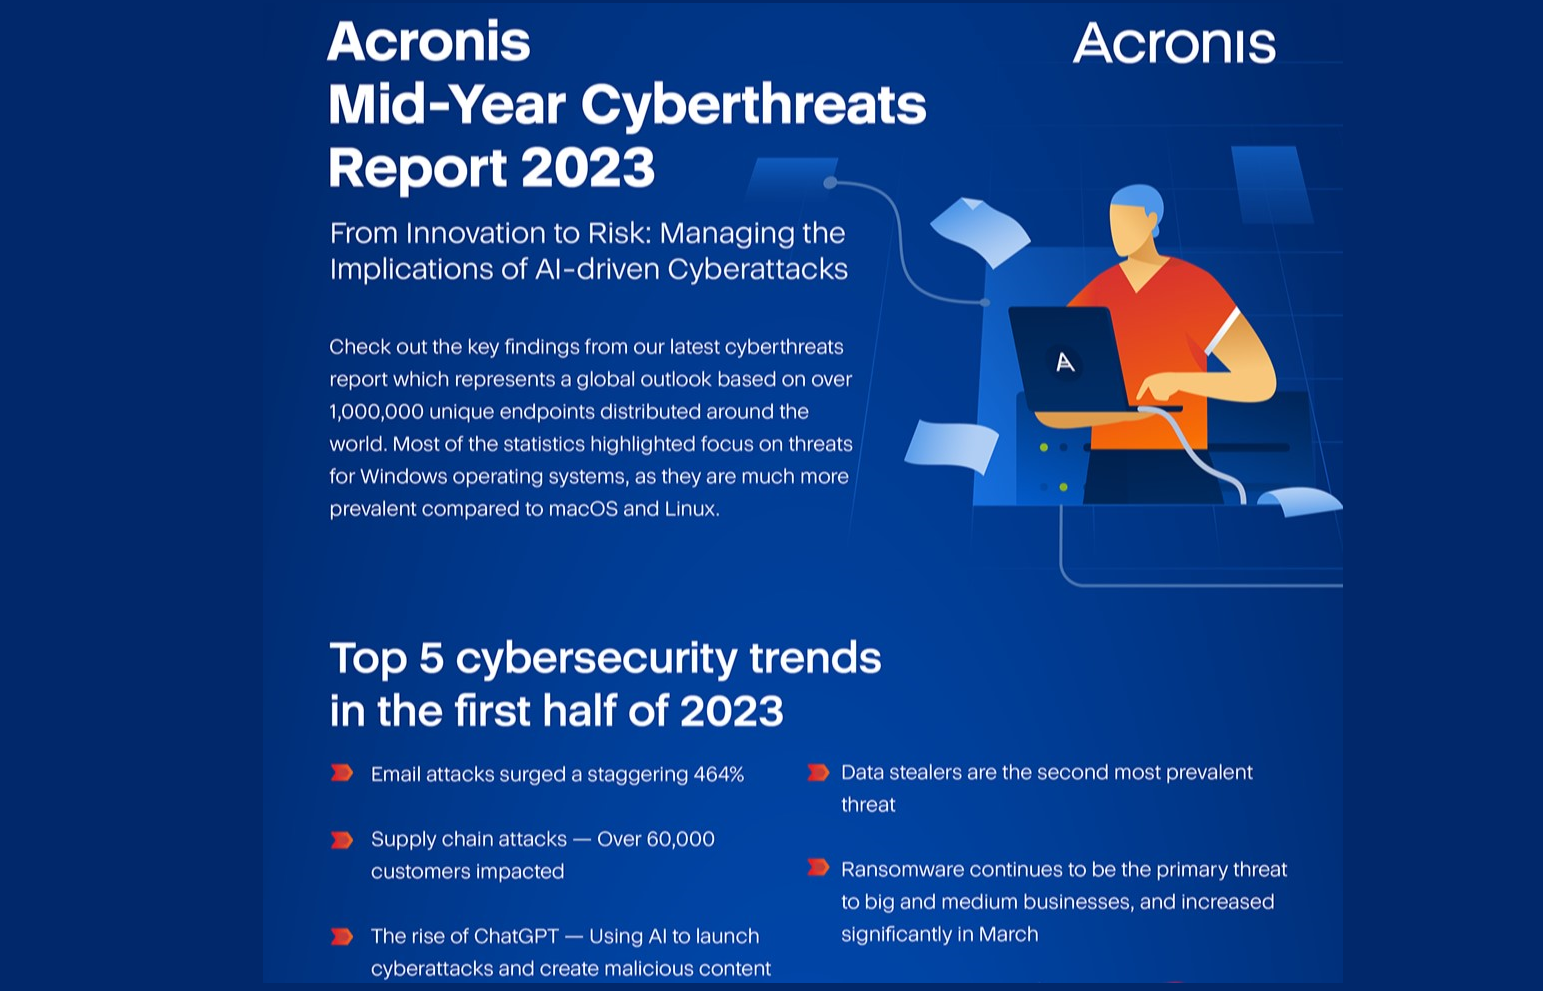 Acronis Cyberthreat Rapport afslører svimlende 464 procent stigning i e-mail angreb